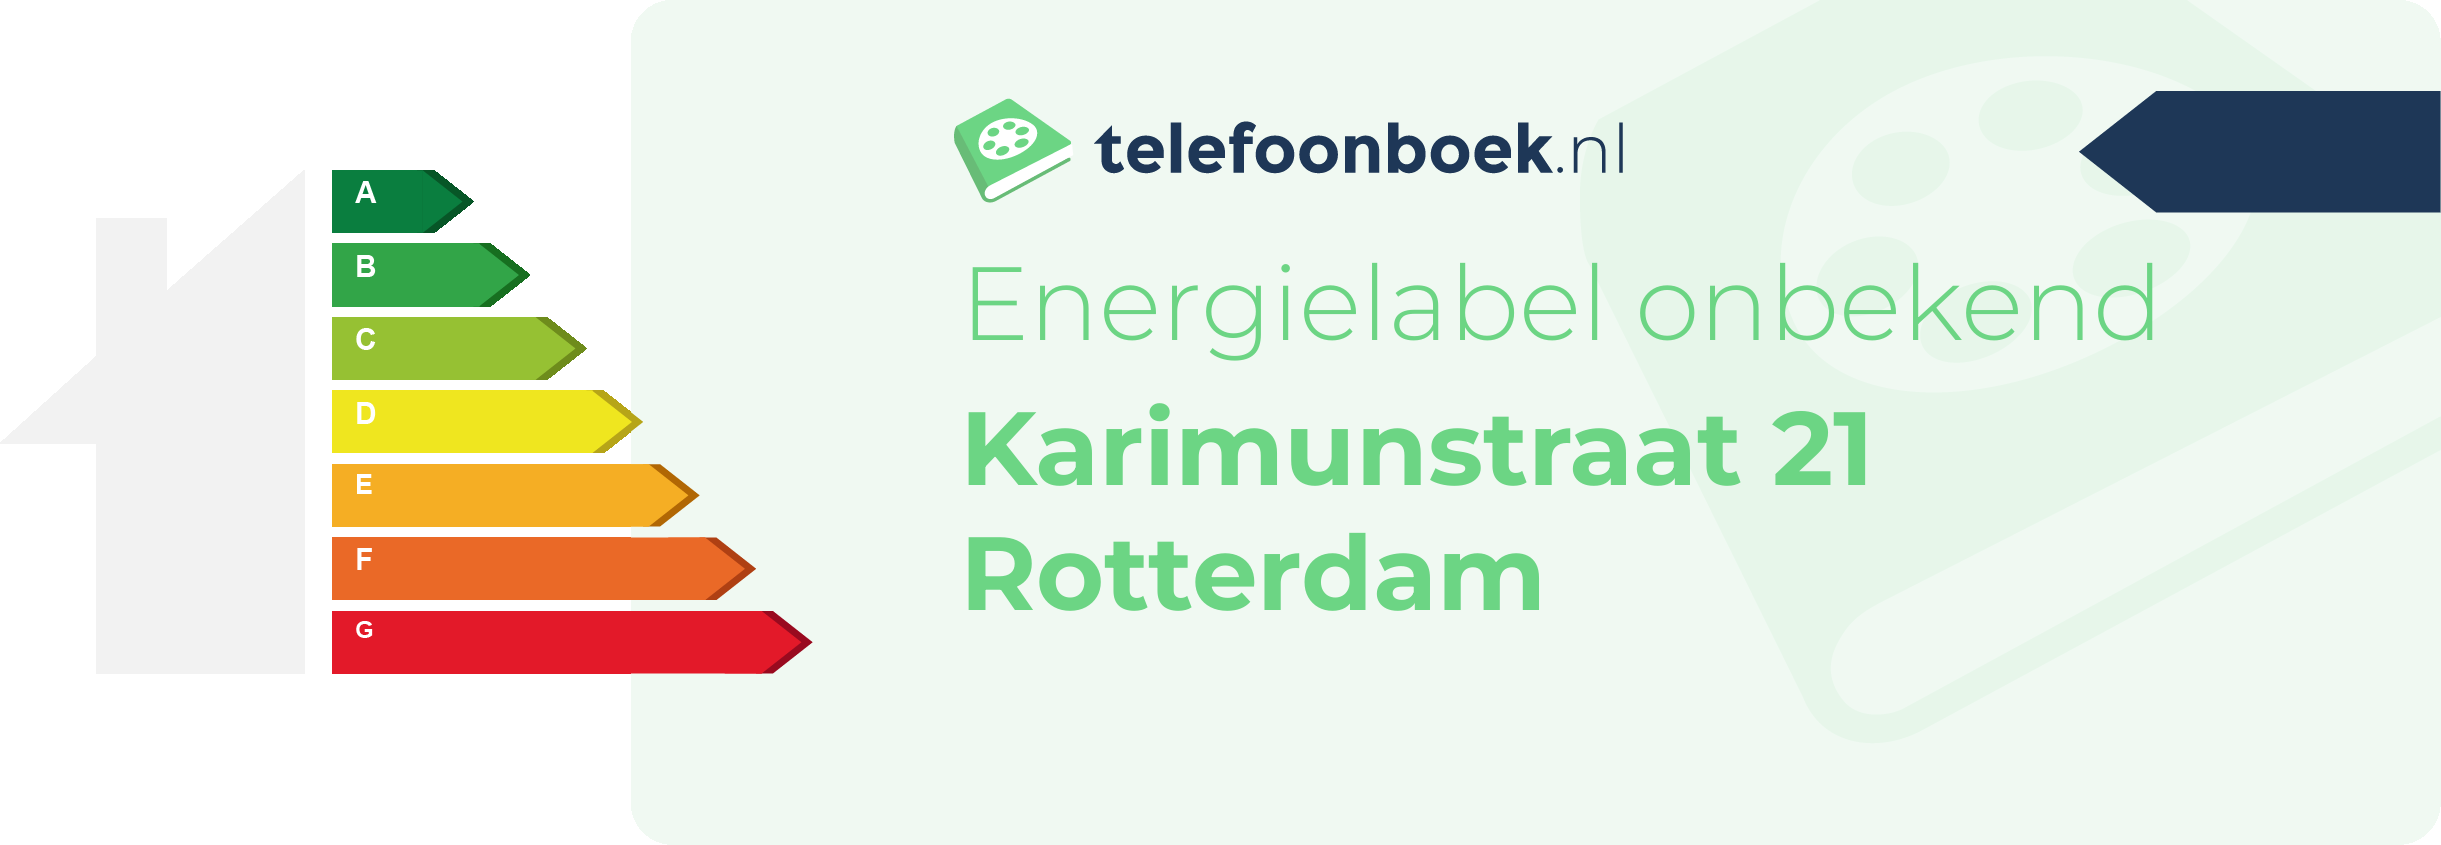 Energielabel Karimunstraat 21 Rotterdam